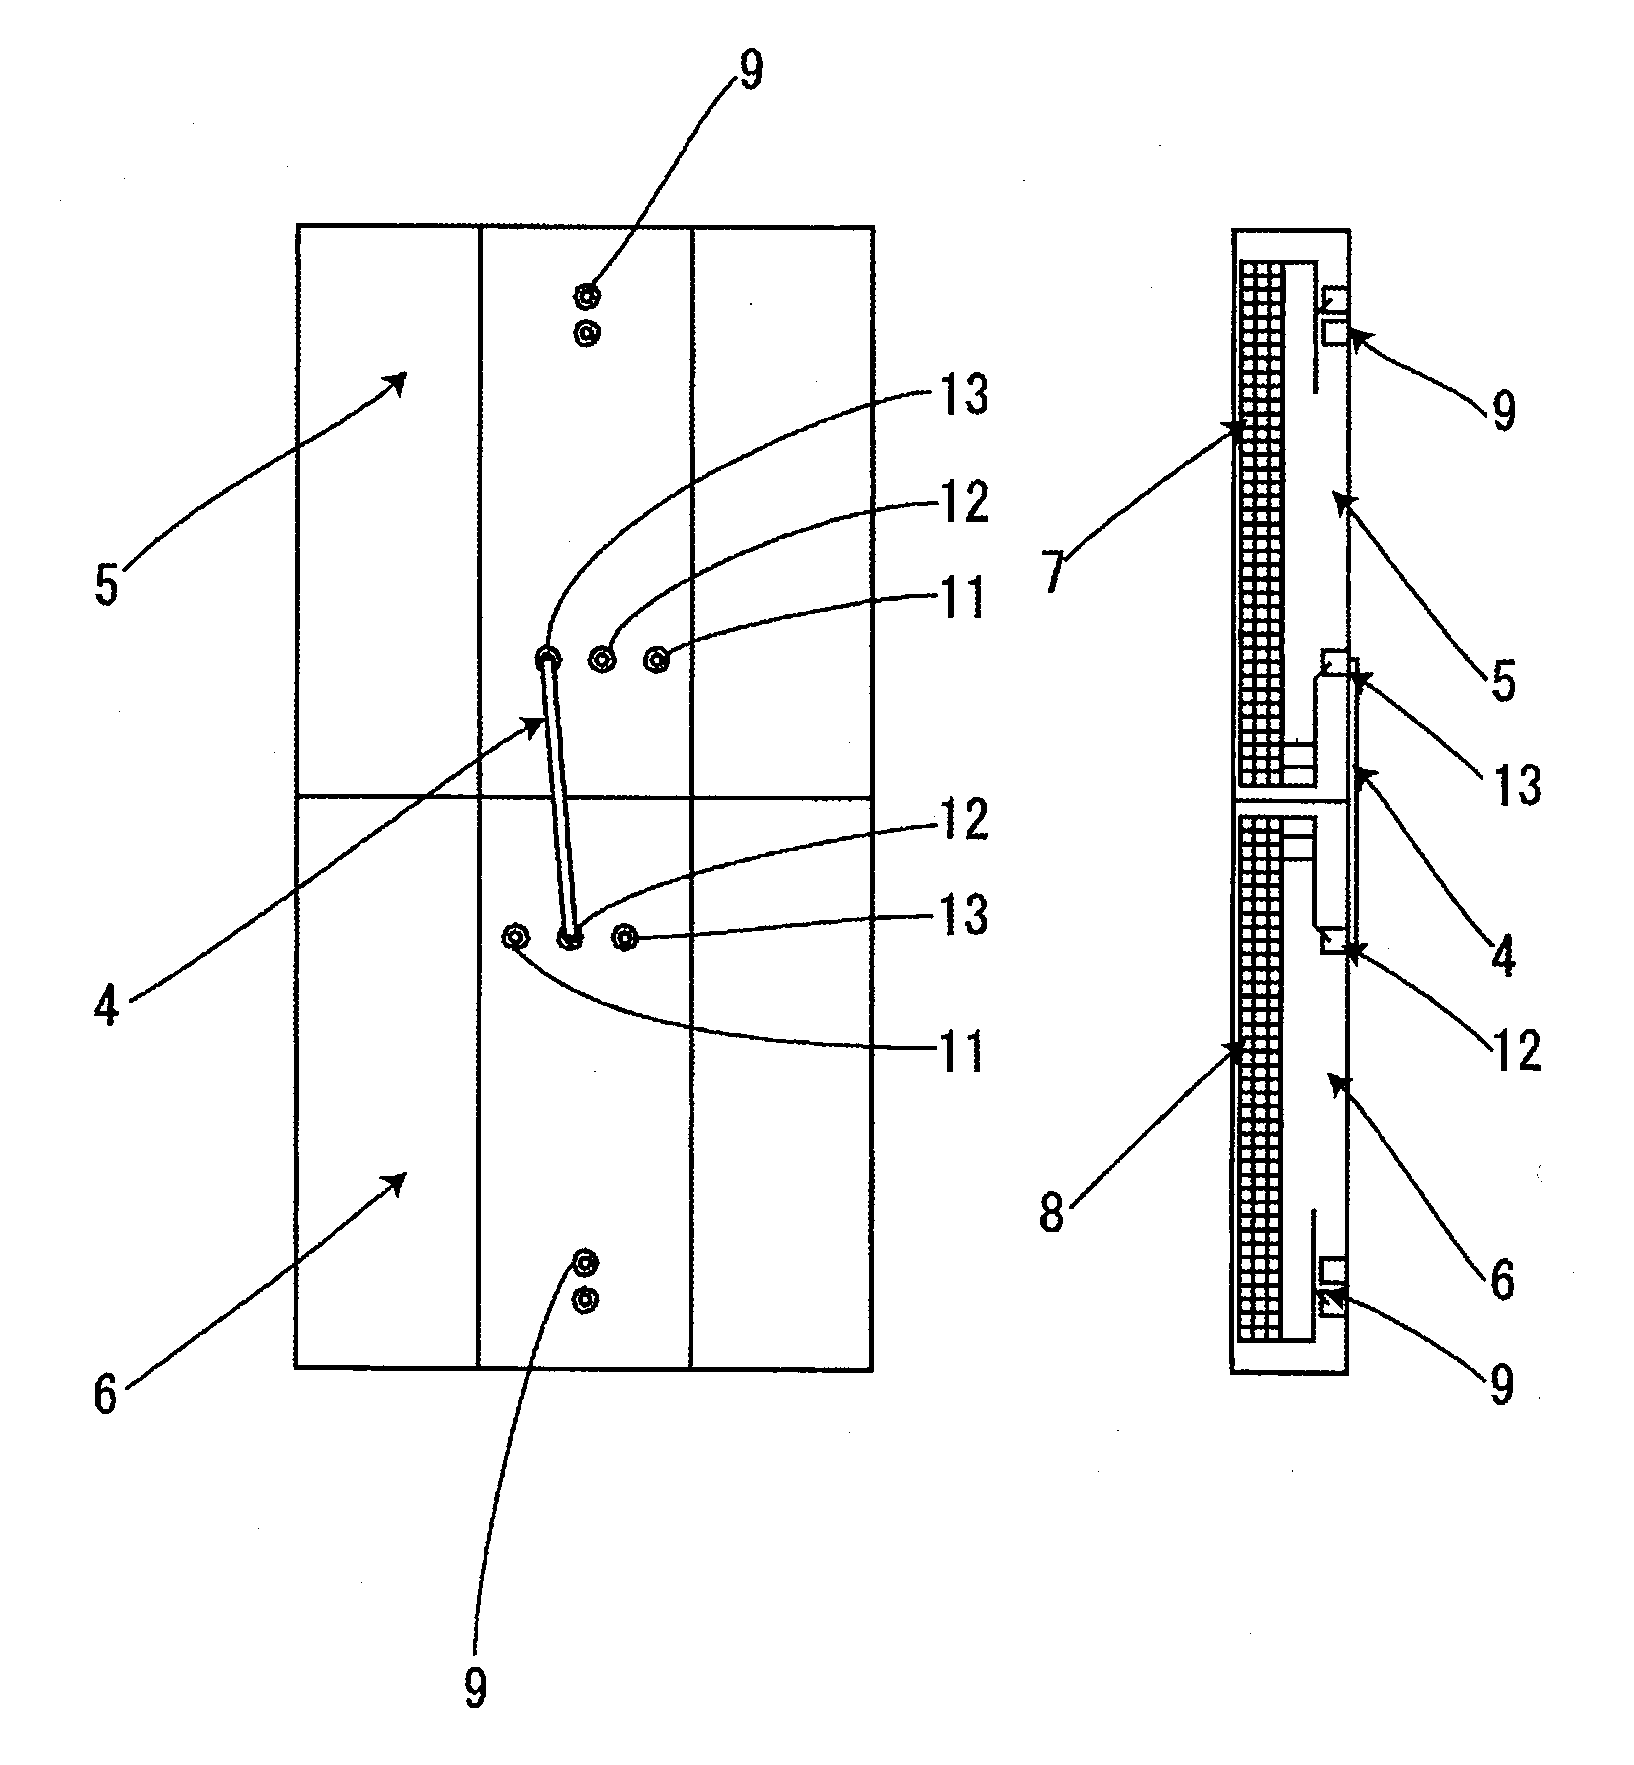 Coil transformer composed of unit configuration